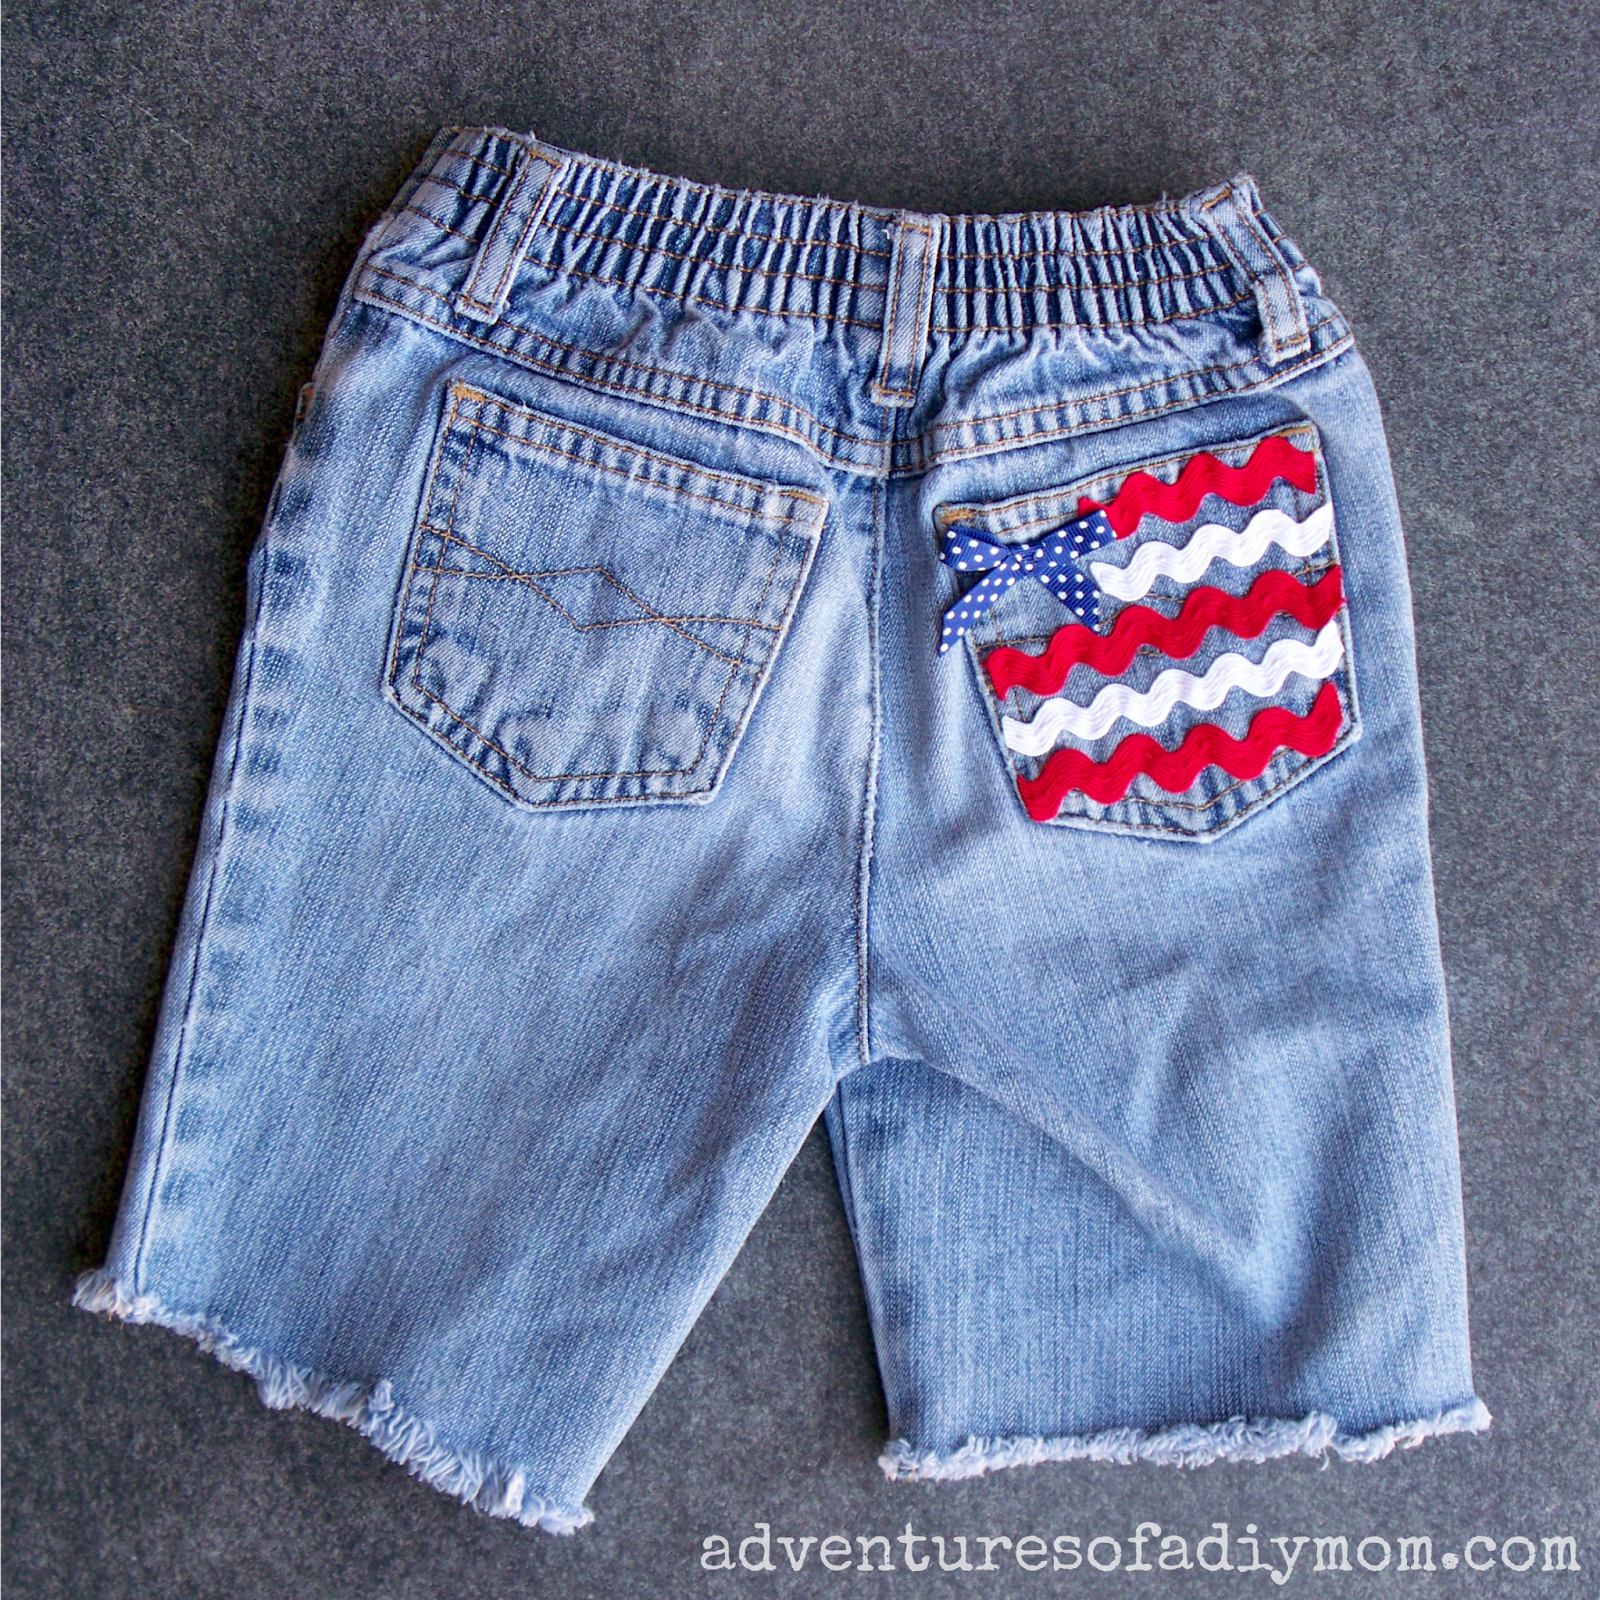 Flag Pocket - Cut off Jean Shorts Series - Adventures of a DIY Mom